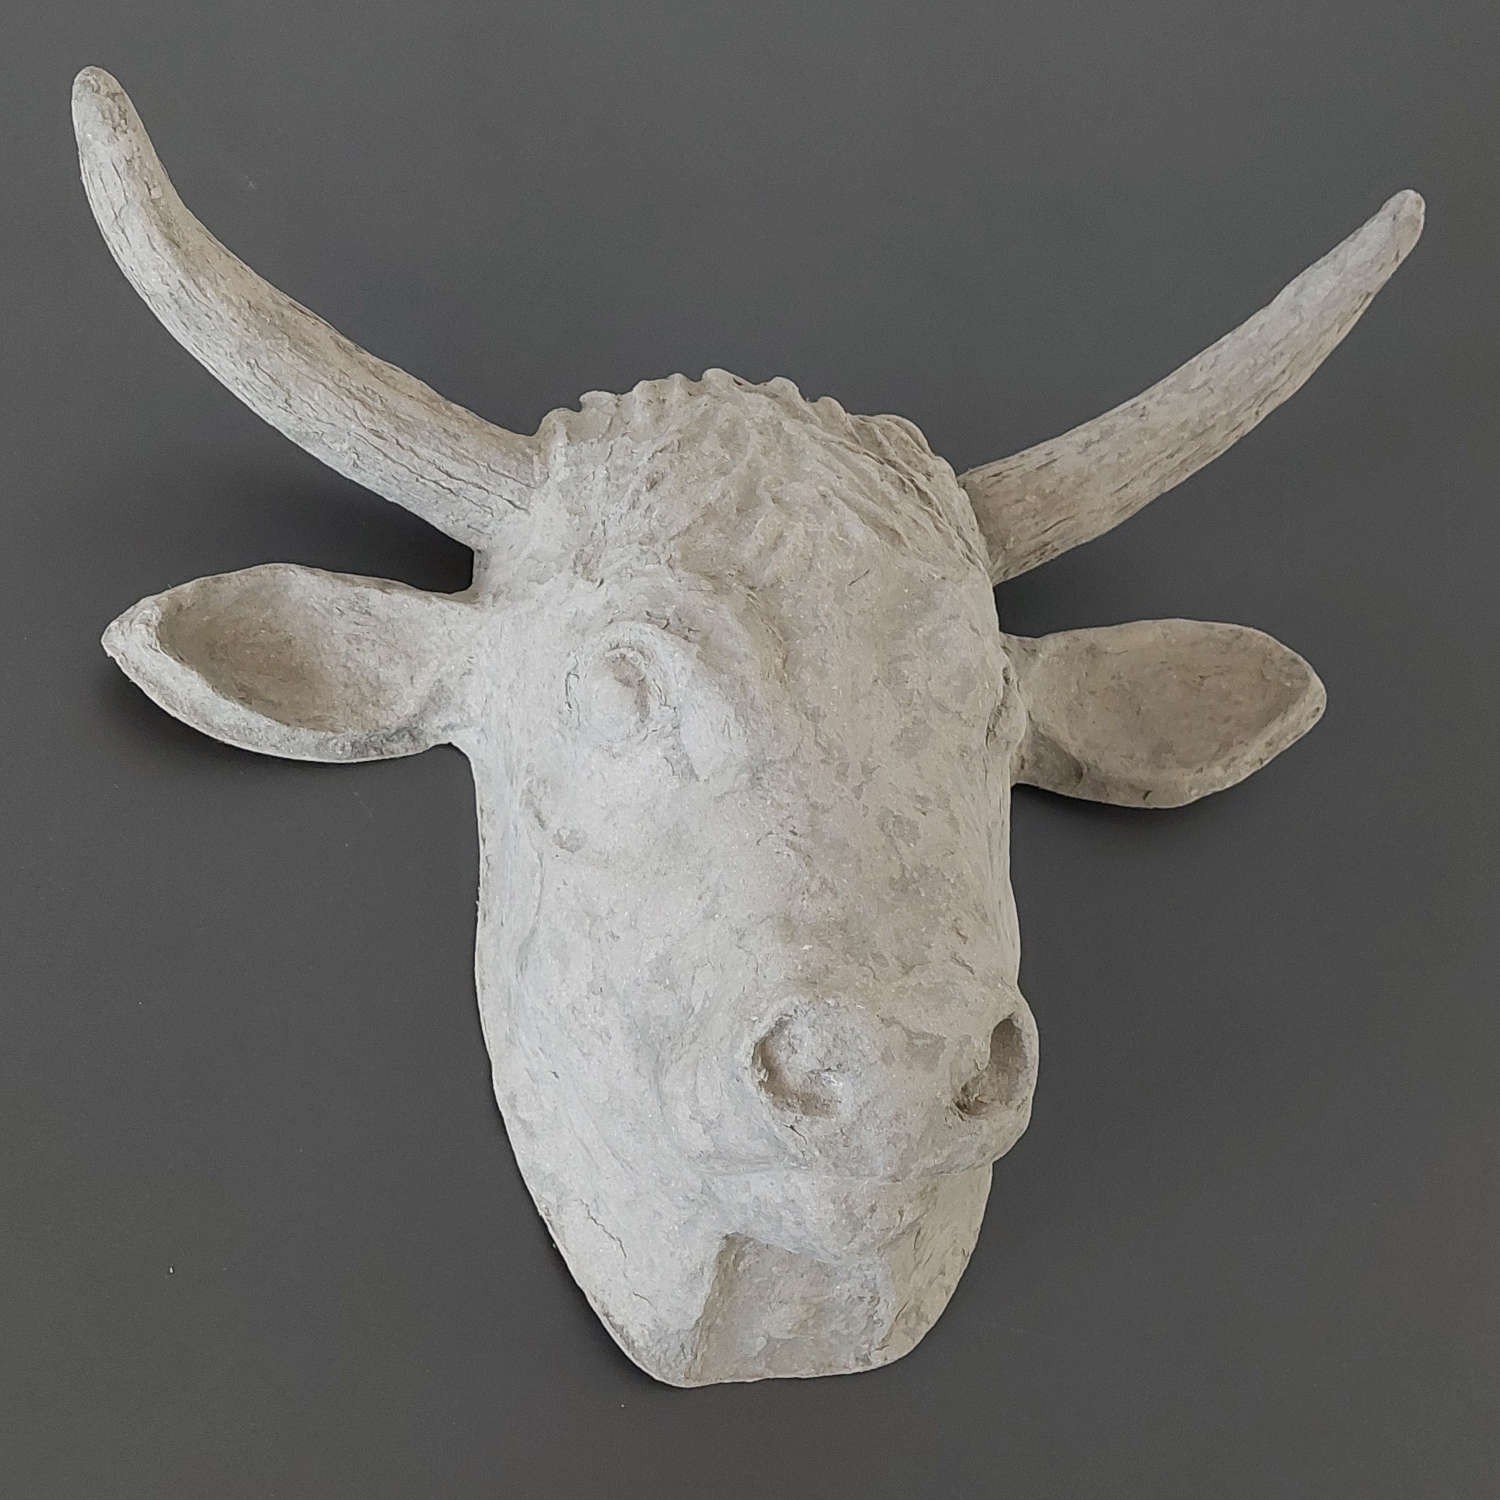 Eco Papier-Mâché Bull Skull in Concrete Look » Blumenfisch